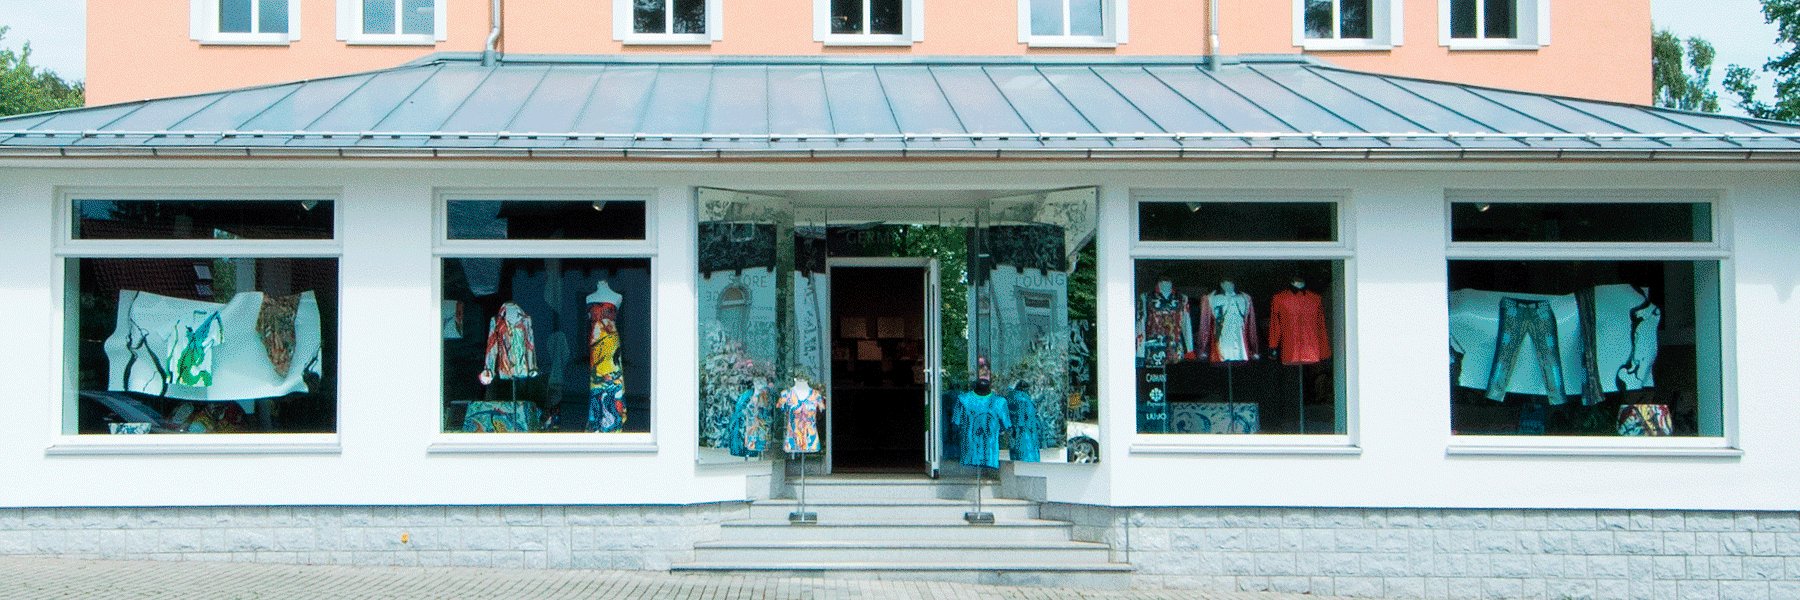 GERMENS Store in Chemnitz Rabenstein - We look forward to your visit!